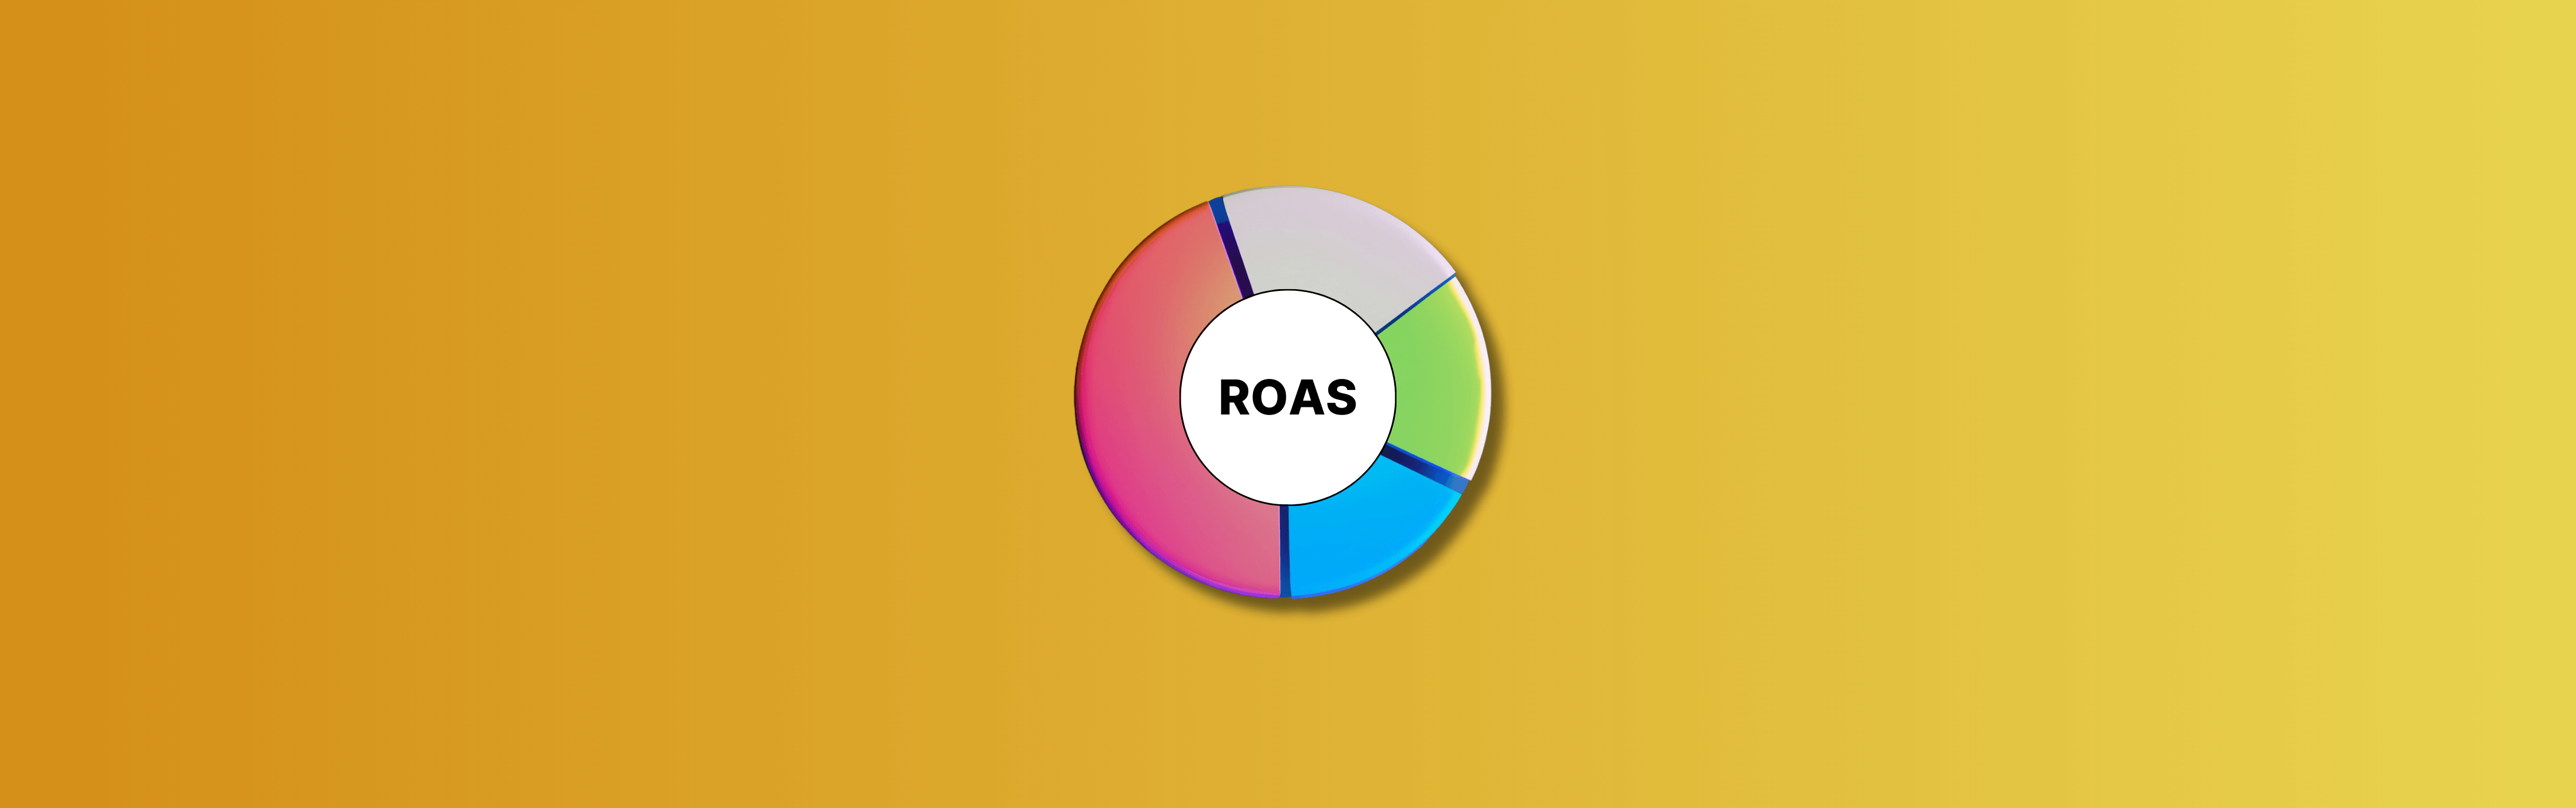 How to calculate ROAS? Breaking Down ROAS Formula